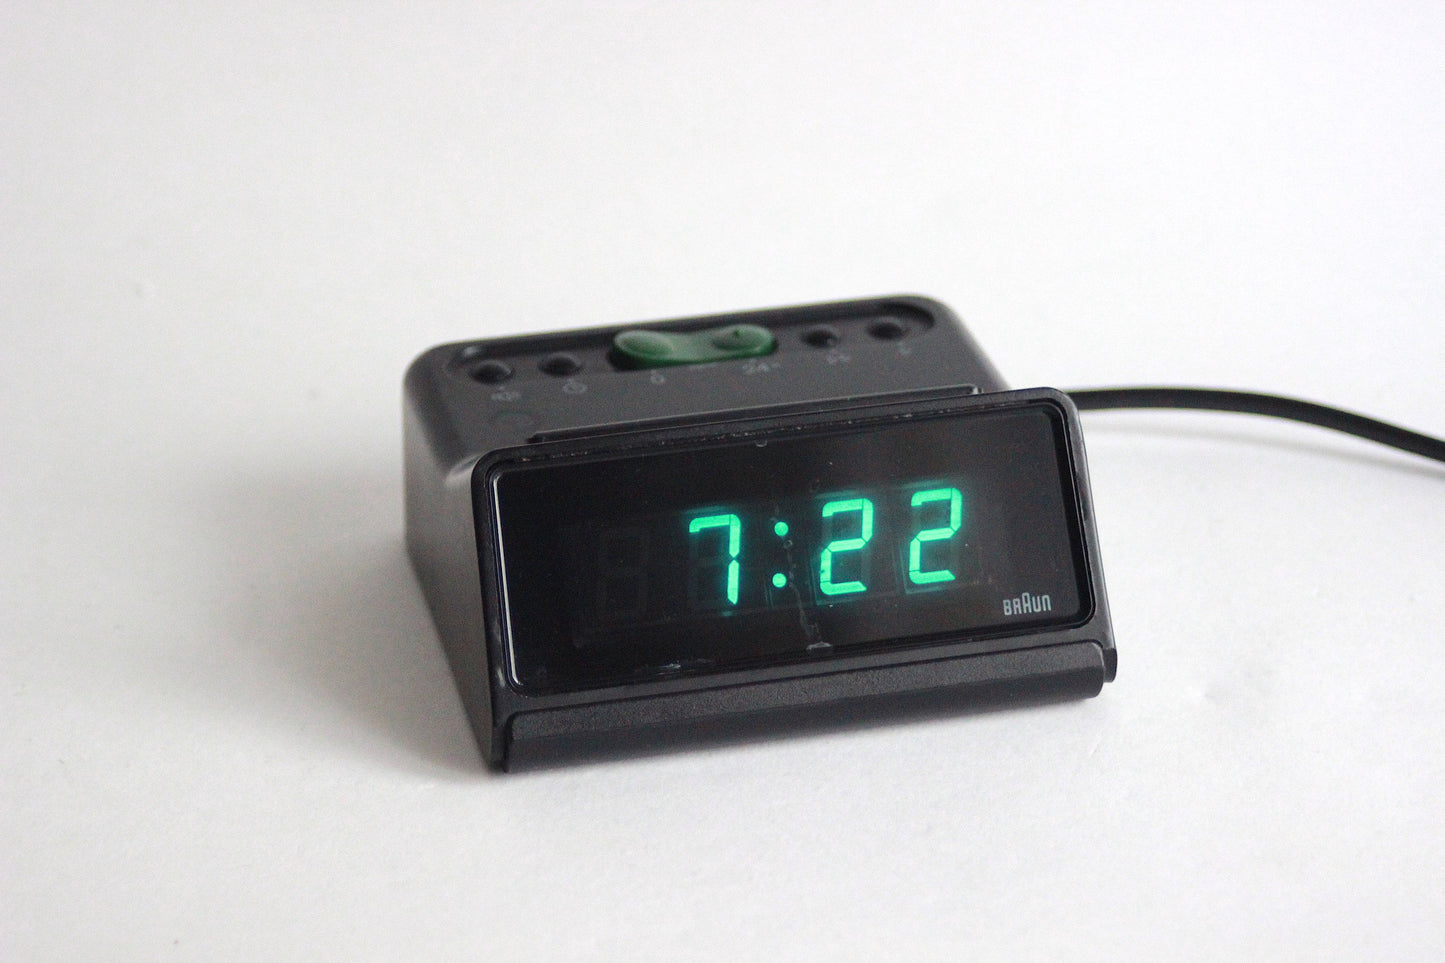 BRAUN DN30s digital alarm clock model 4808. Dietrich Lubs, Germany 1983.